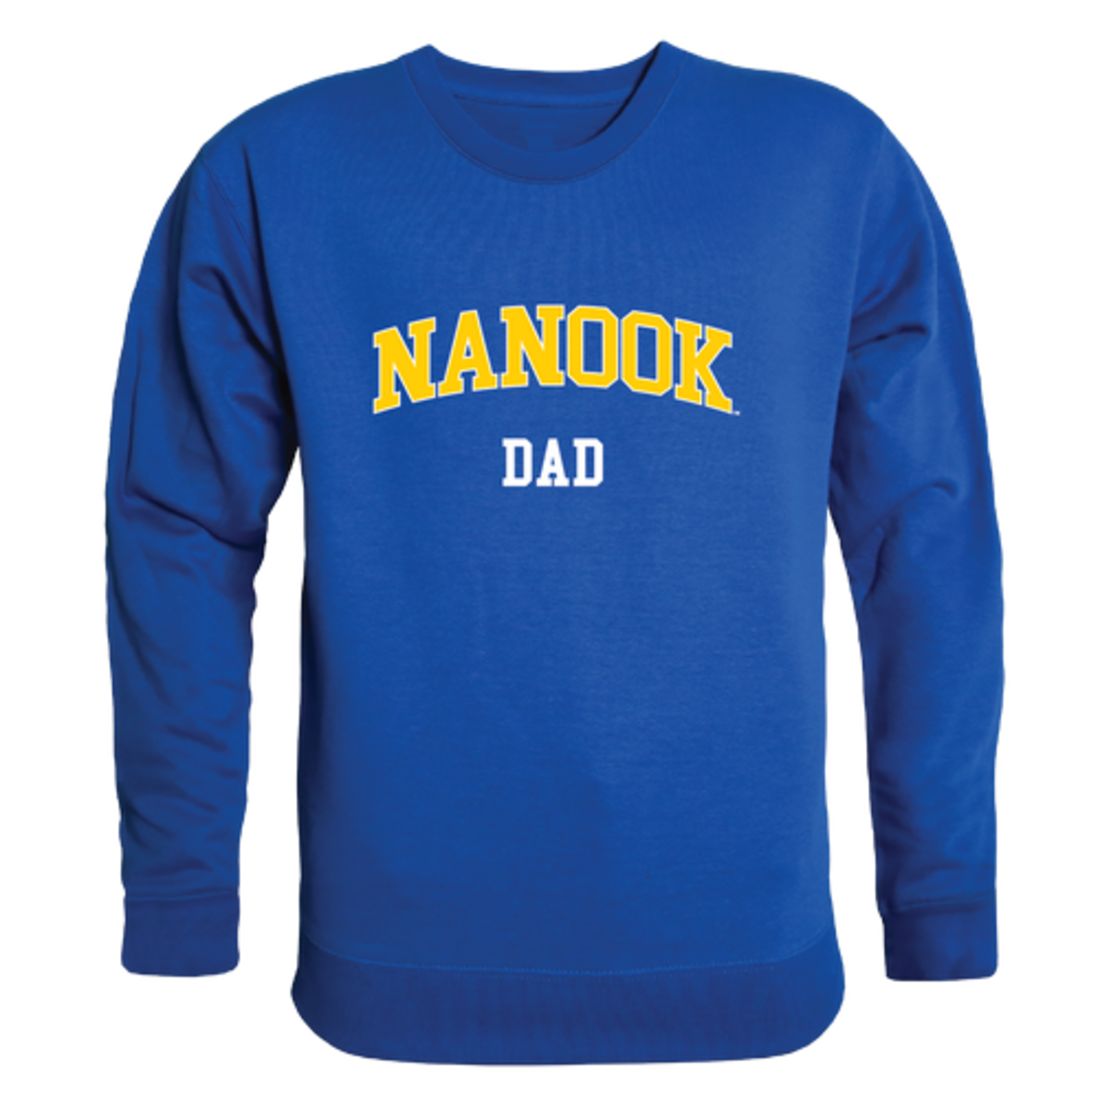 The University of Alaska Fairbanks Nanooks Dad Fleece Crewneck Pullover Sweatshirt